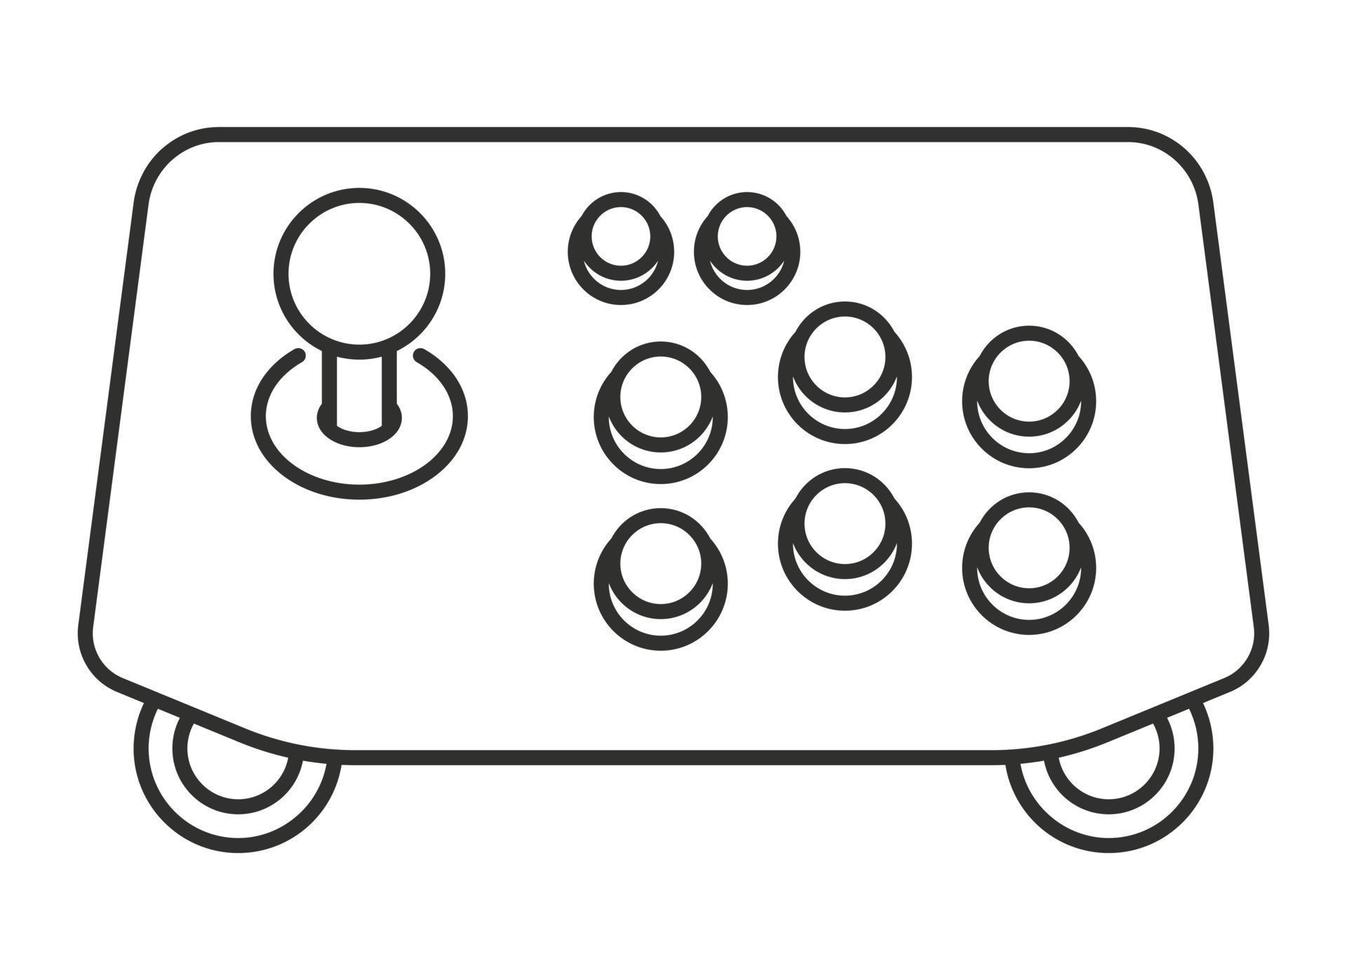 Arcade joystick controller line art icon for apps or website vector